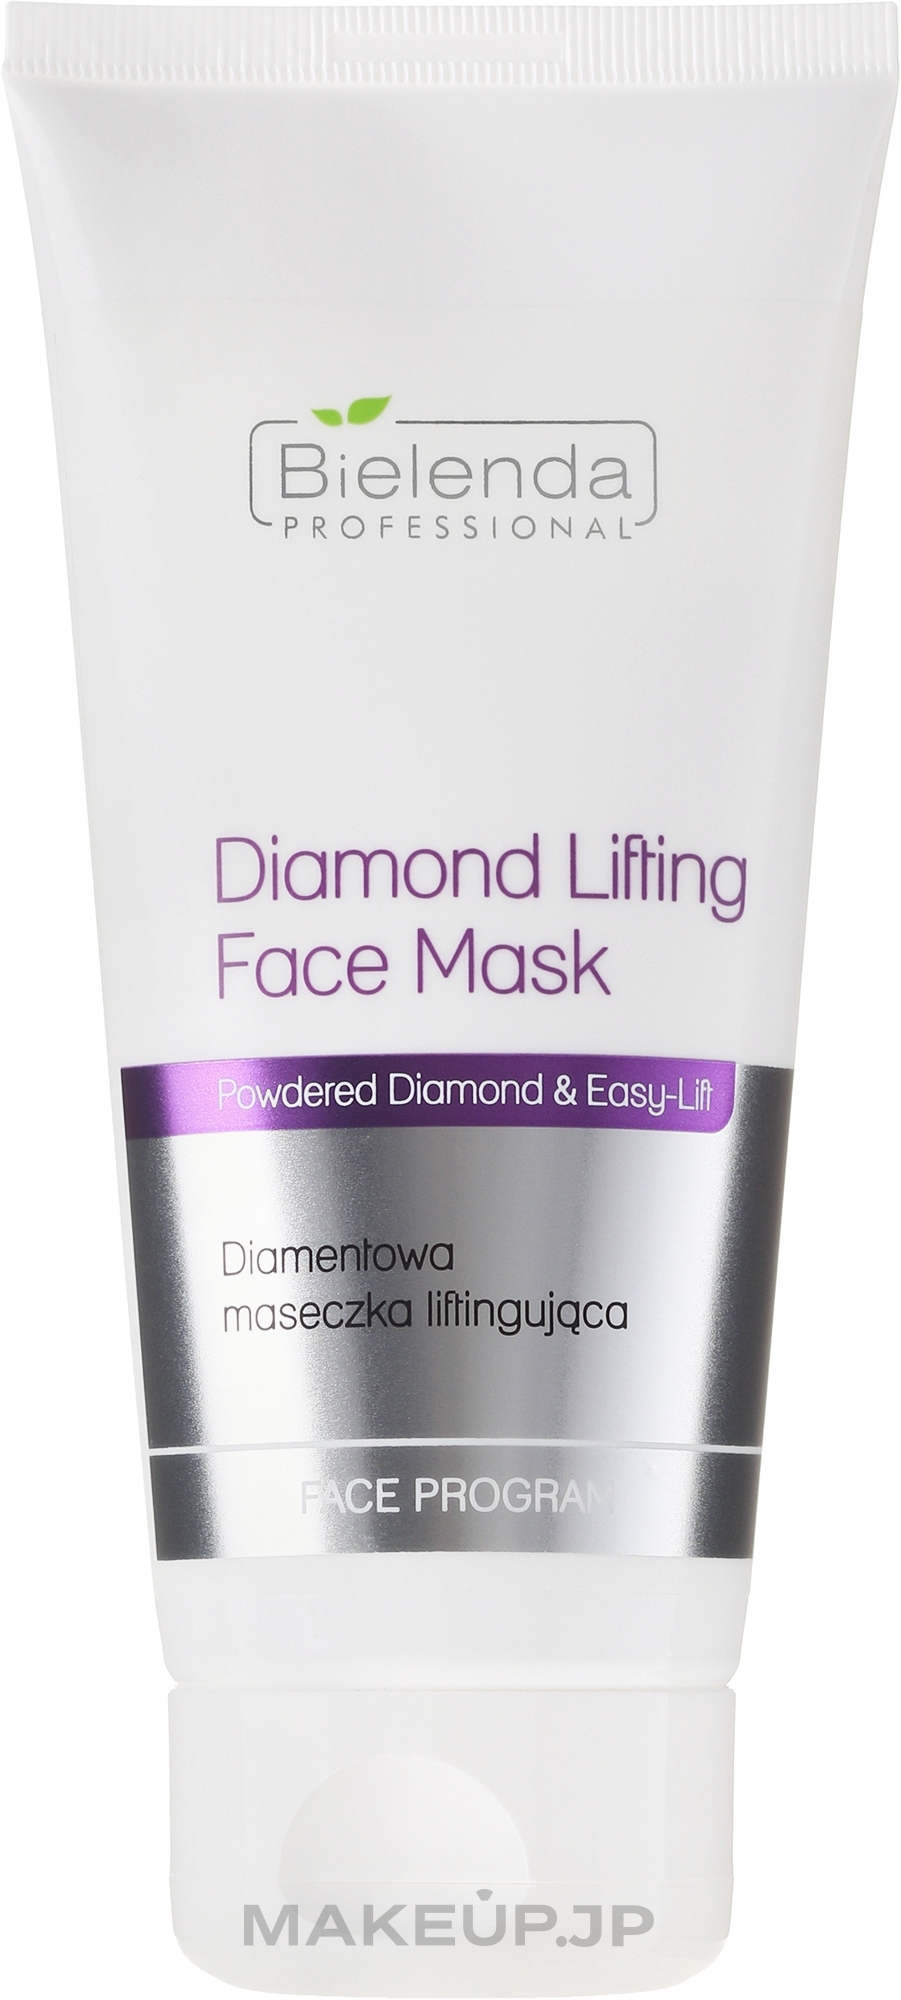 Diamond Face Mask - Bielenda Professional Face Program Diamond Lifting Face Mask — photo 175 ml